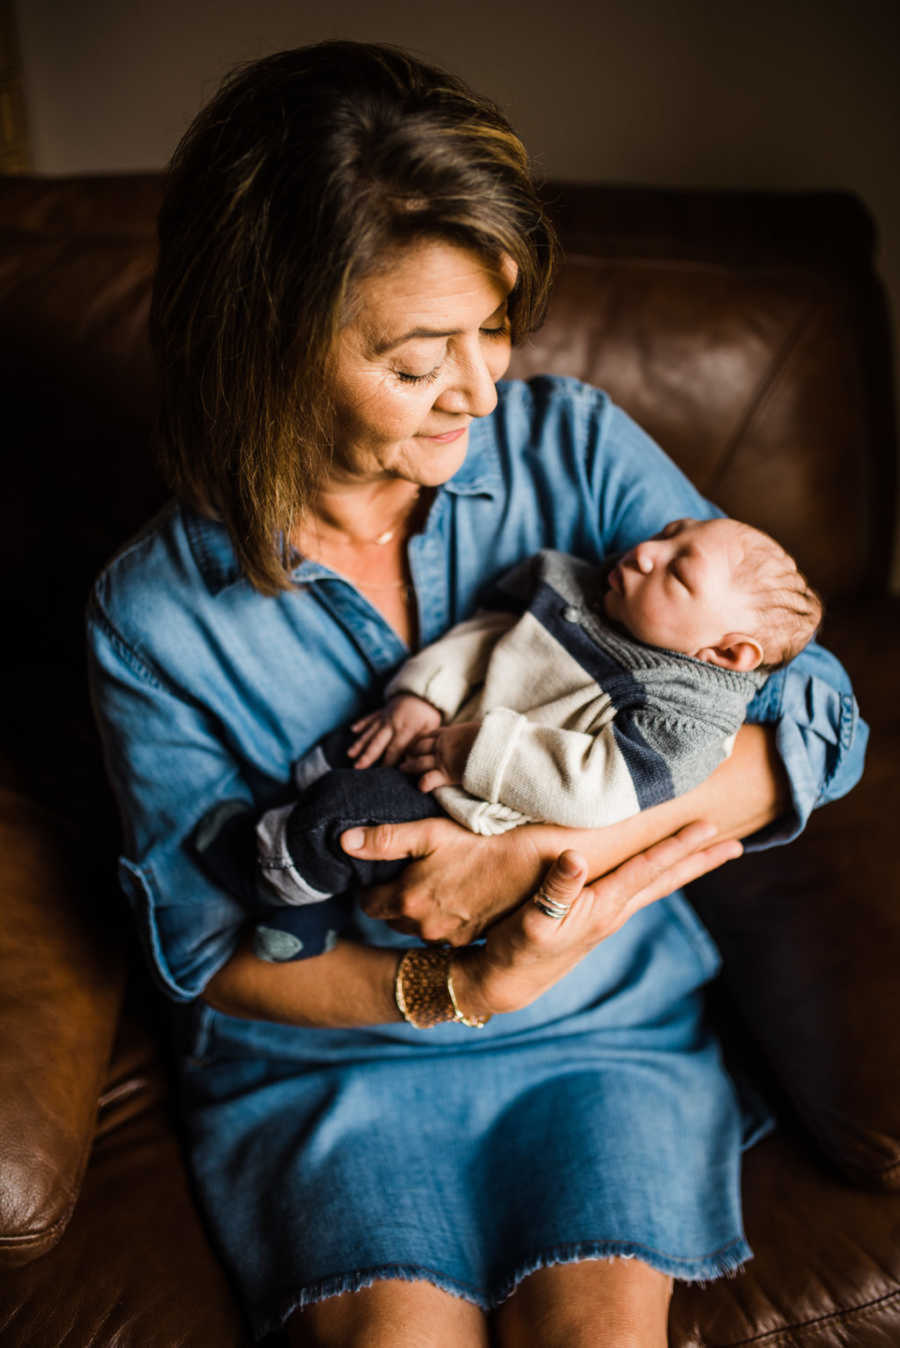 Grandma holding newborn son